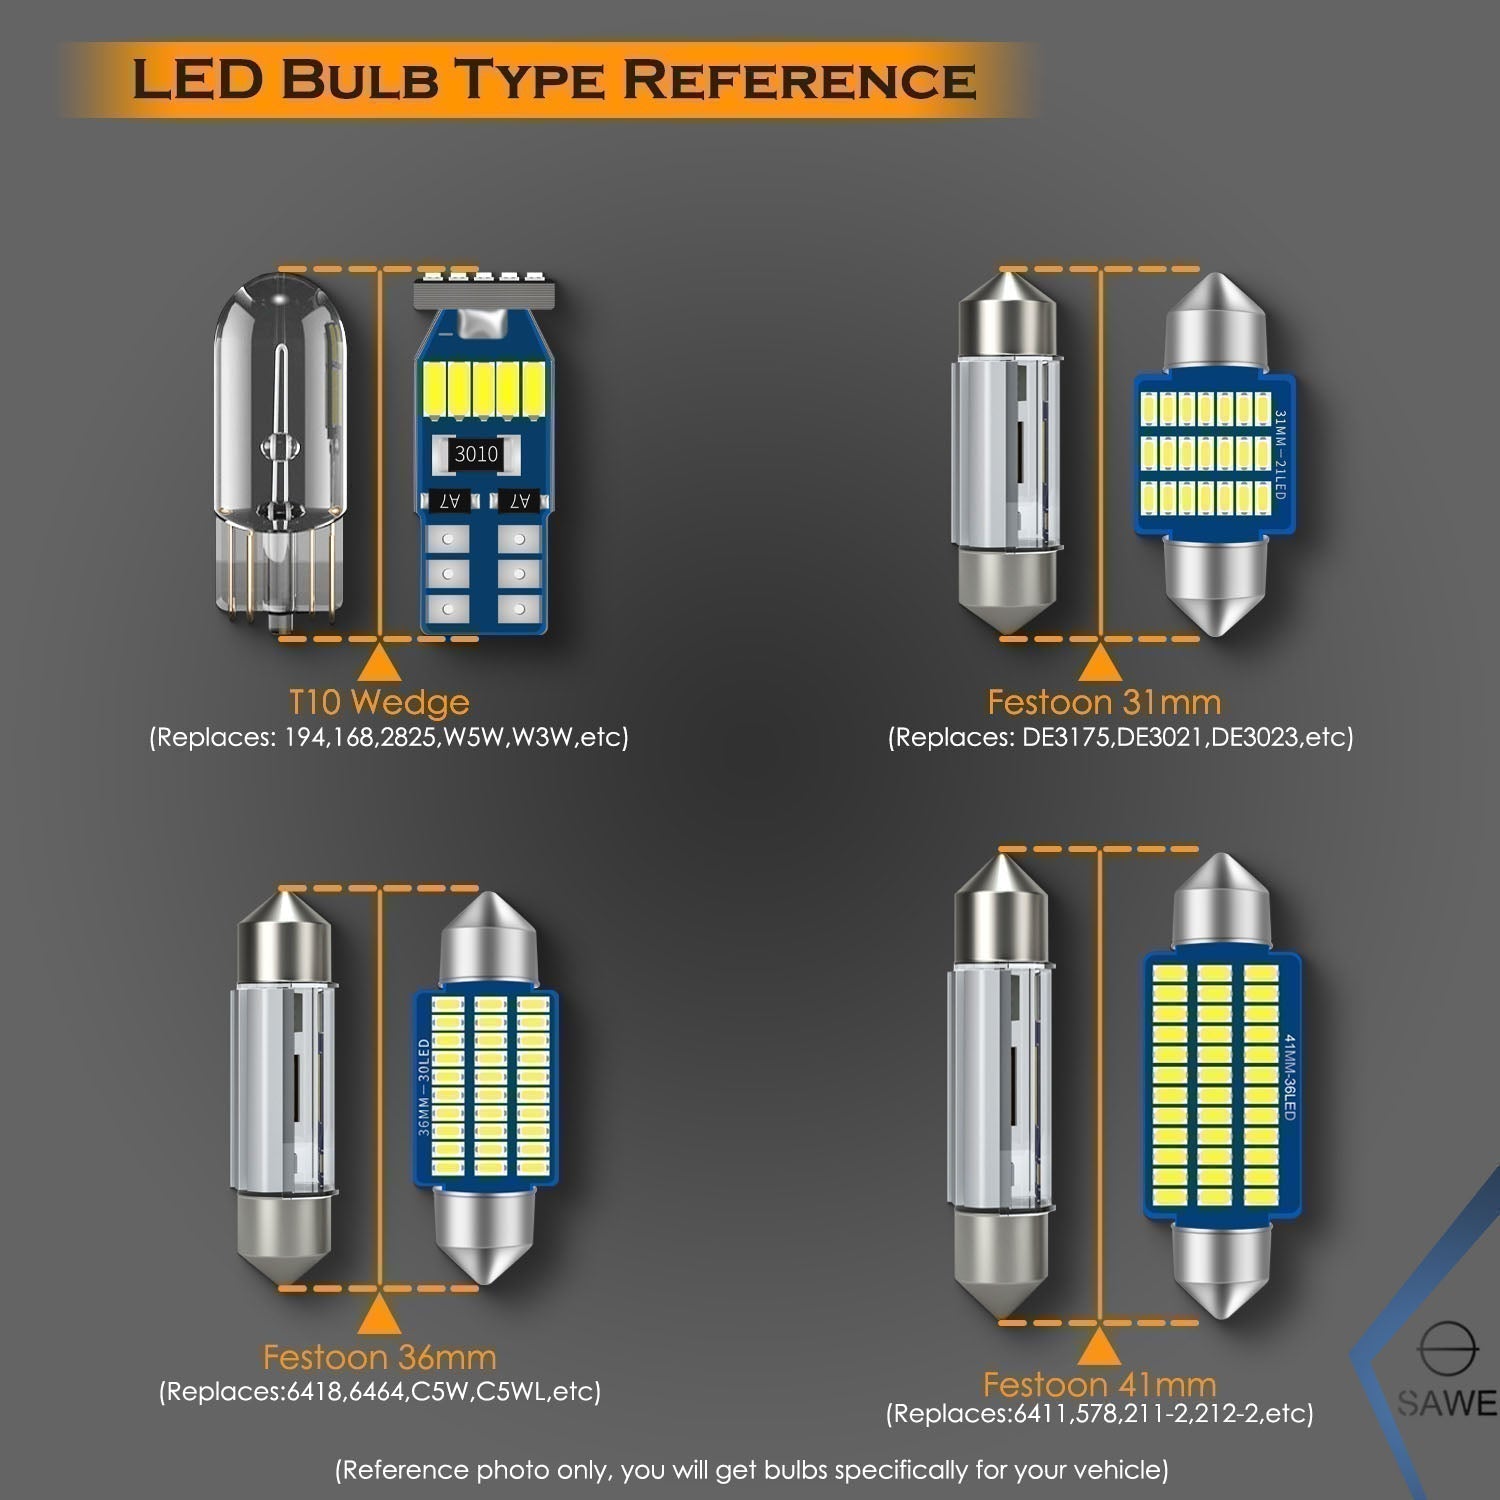 For Lexus LS460 Interior LED Lights - Dome & Map Light Bulbs Package Kit for 2007 - 2012 - White